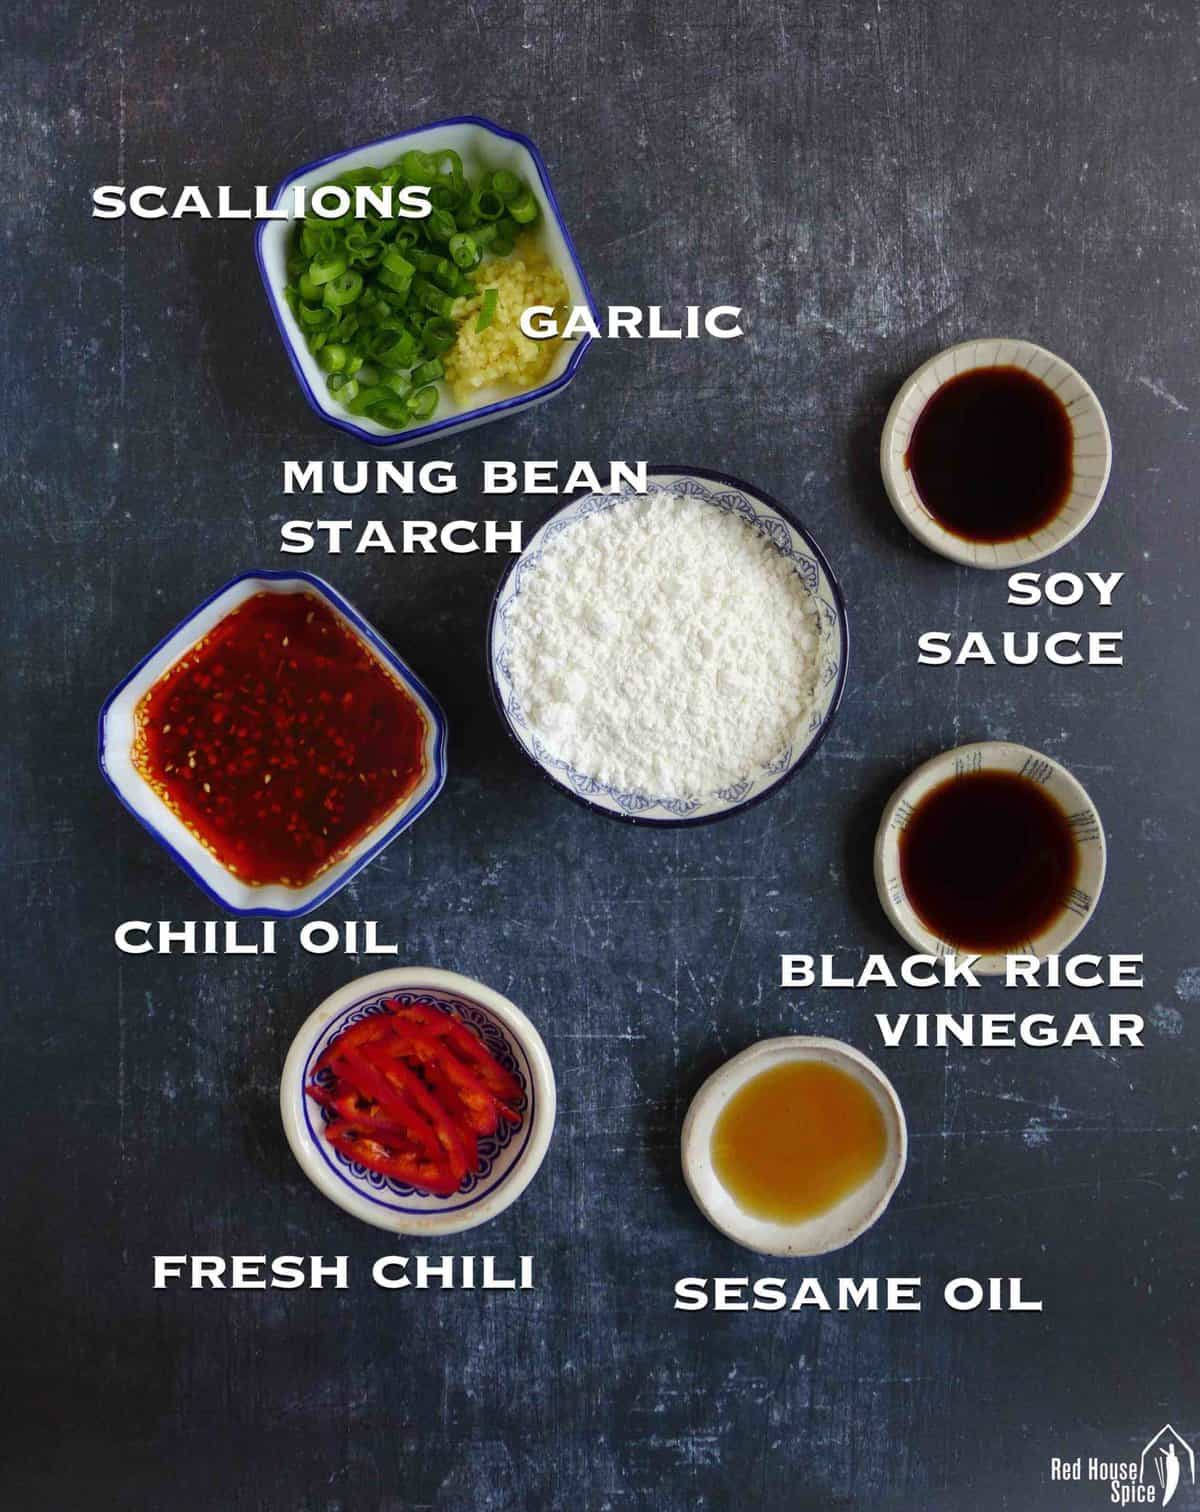 Ingredients including starch, scallions, garlic, soy sauce, vinegar, sesame oil, chili oil, etc.